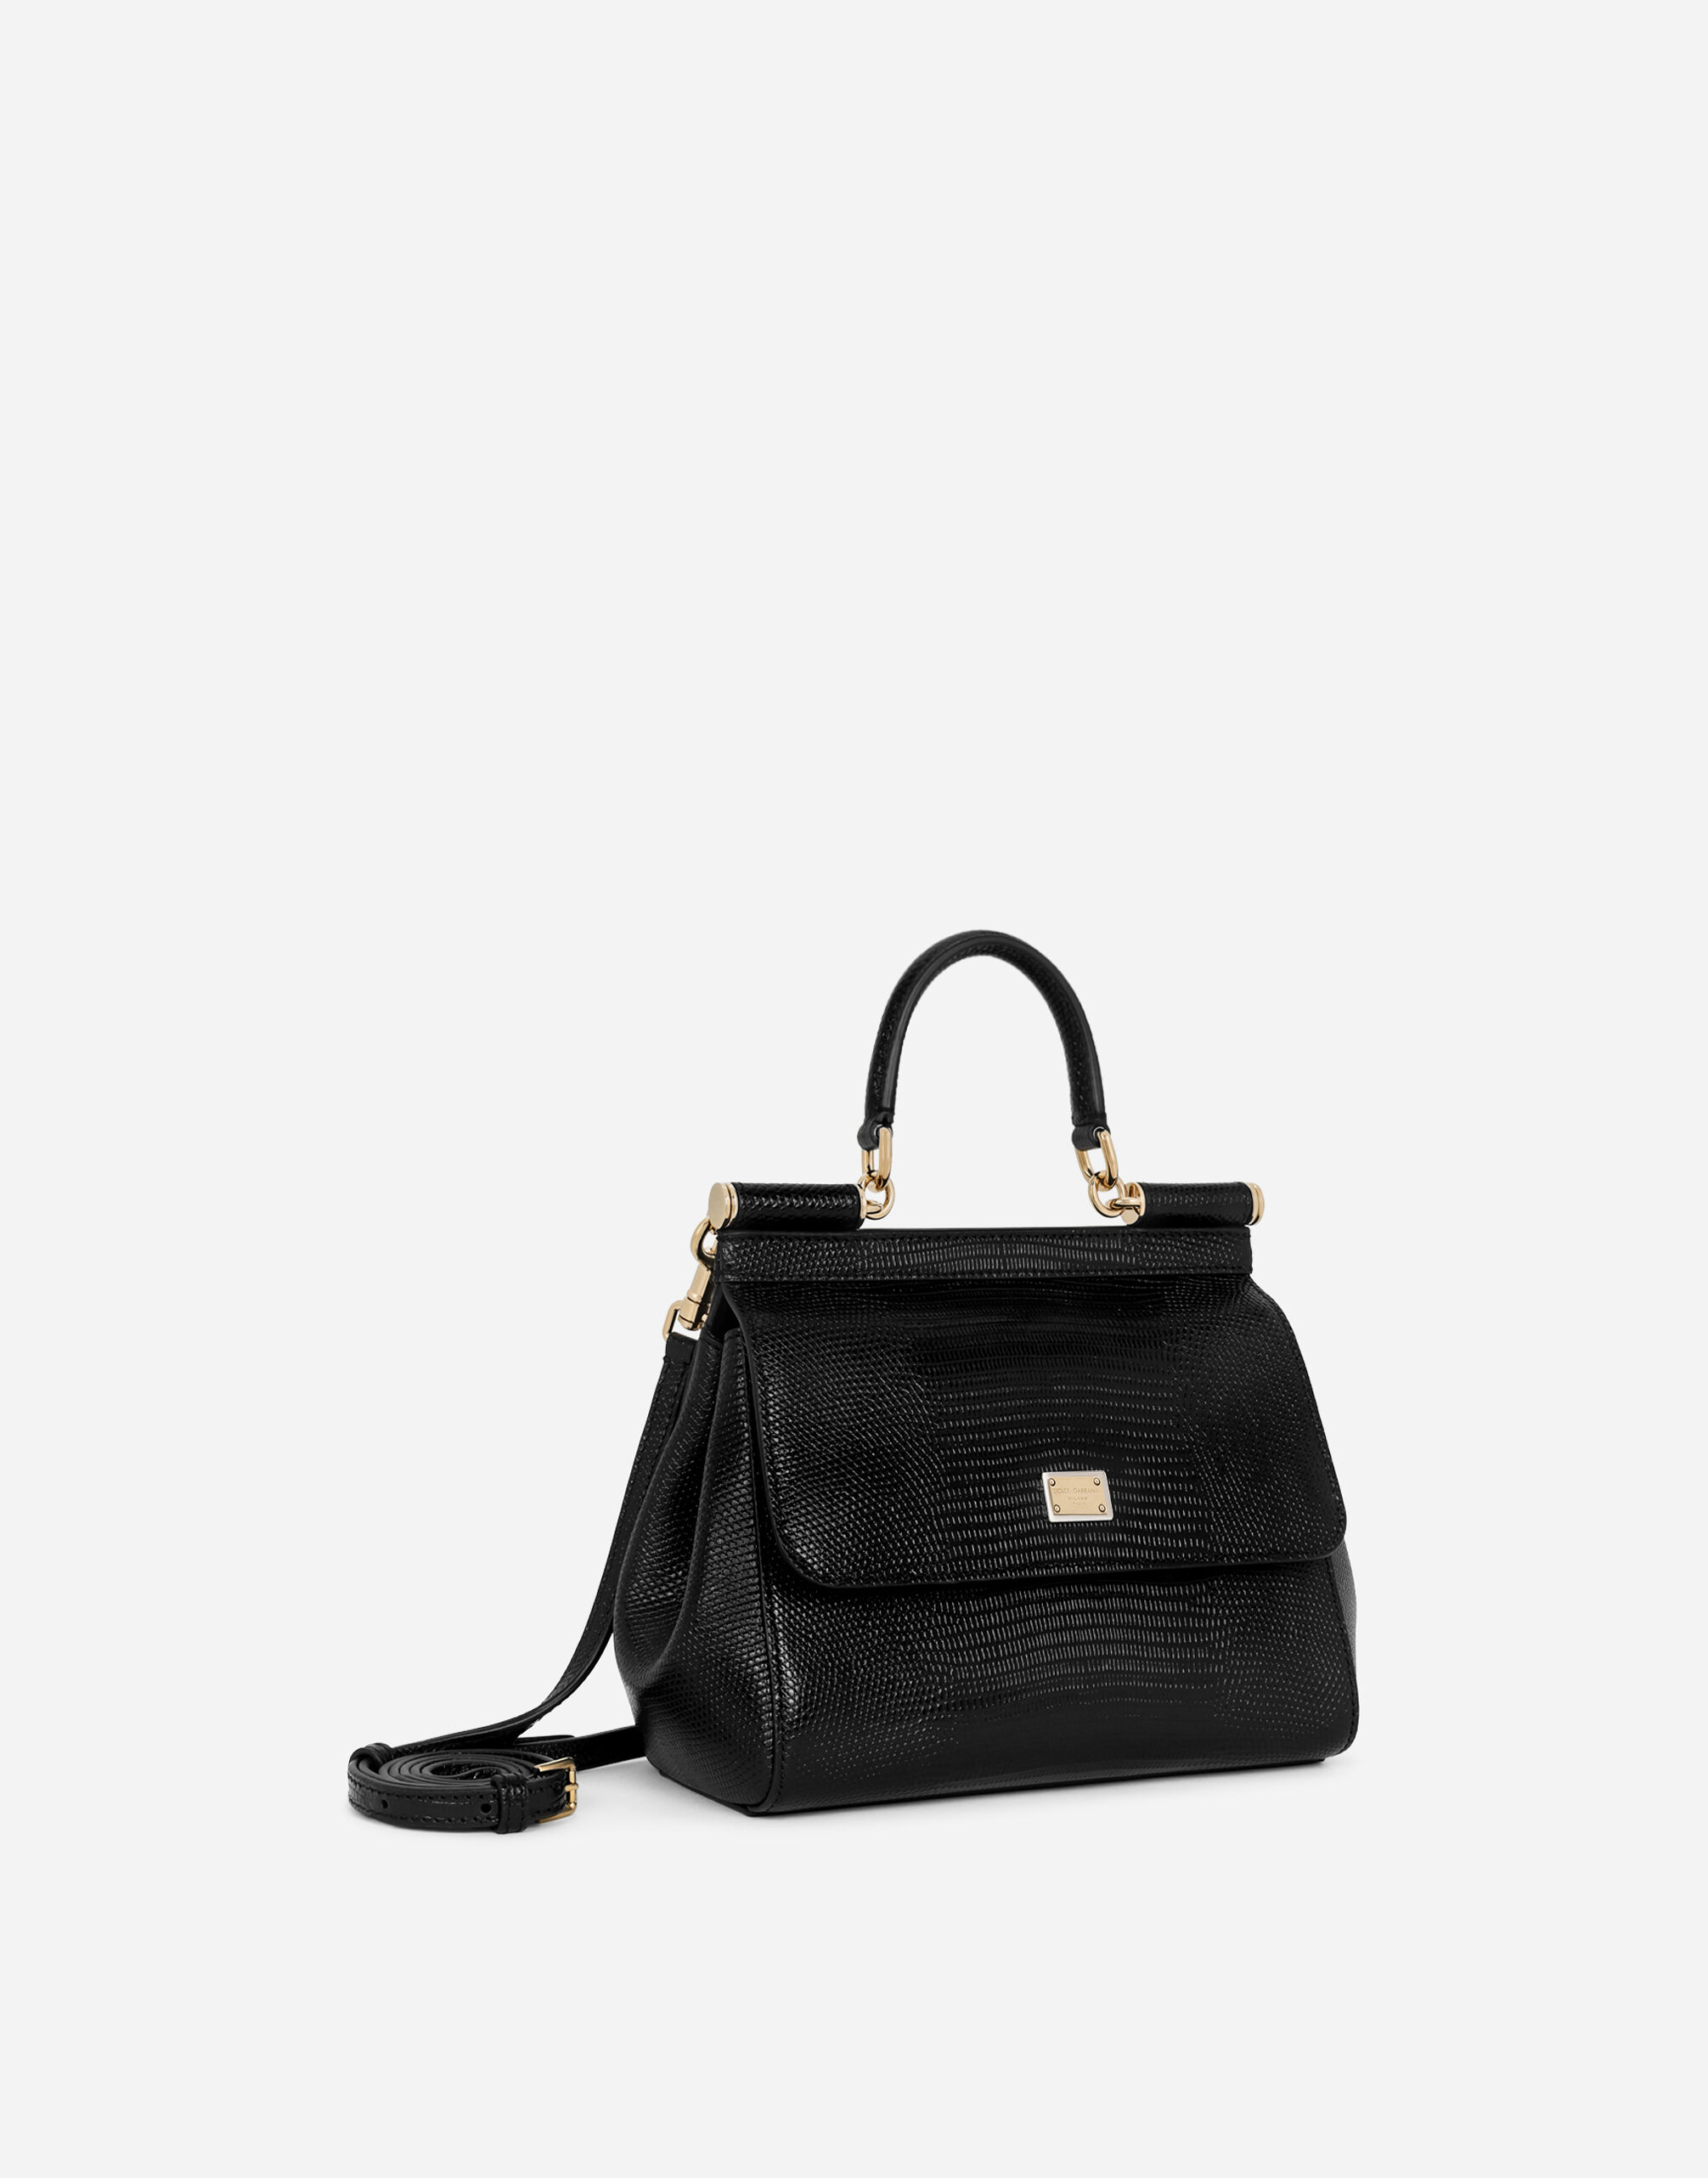 Medium Sicily handbag in Black for Women | Dolce&Gabbana®